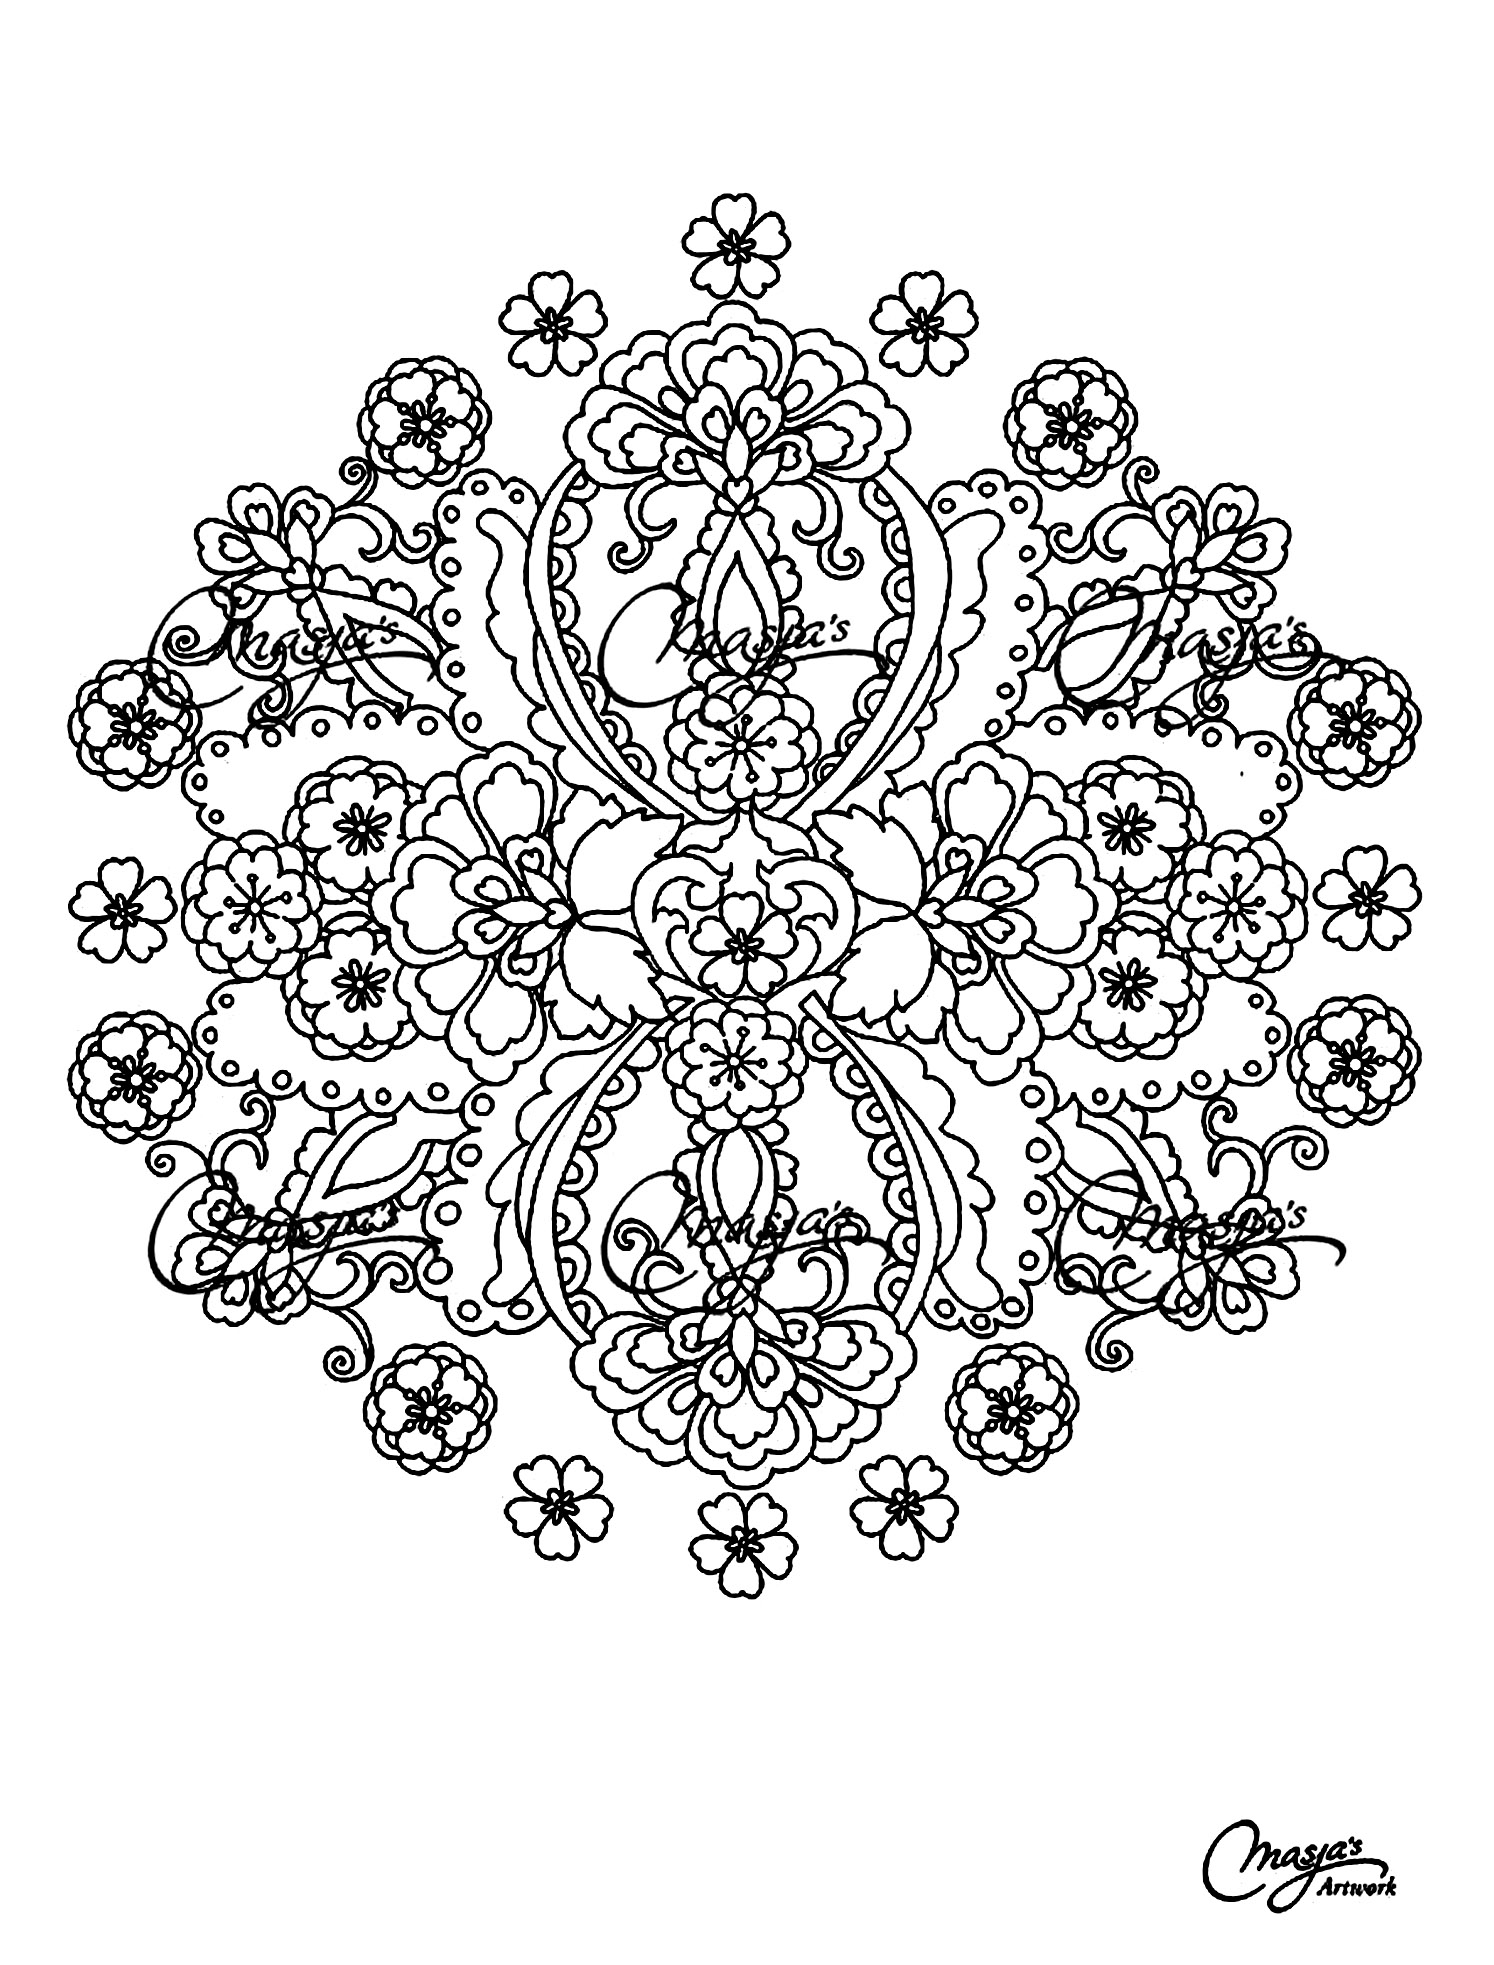 Elegant Mandala coloring page with flowers and vegetal patterns. Mandalas offer balancing visual elements, symbolizing unity and harmony.